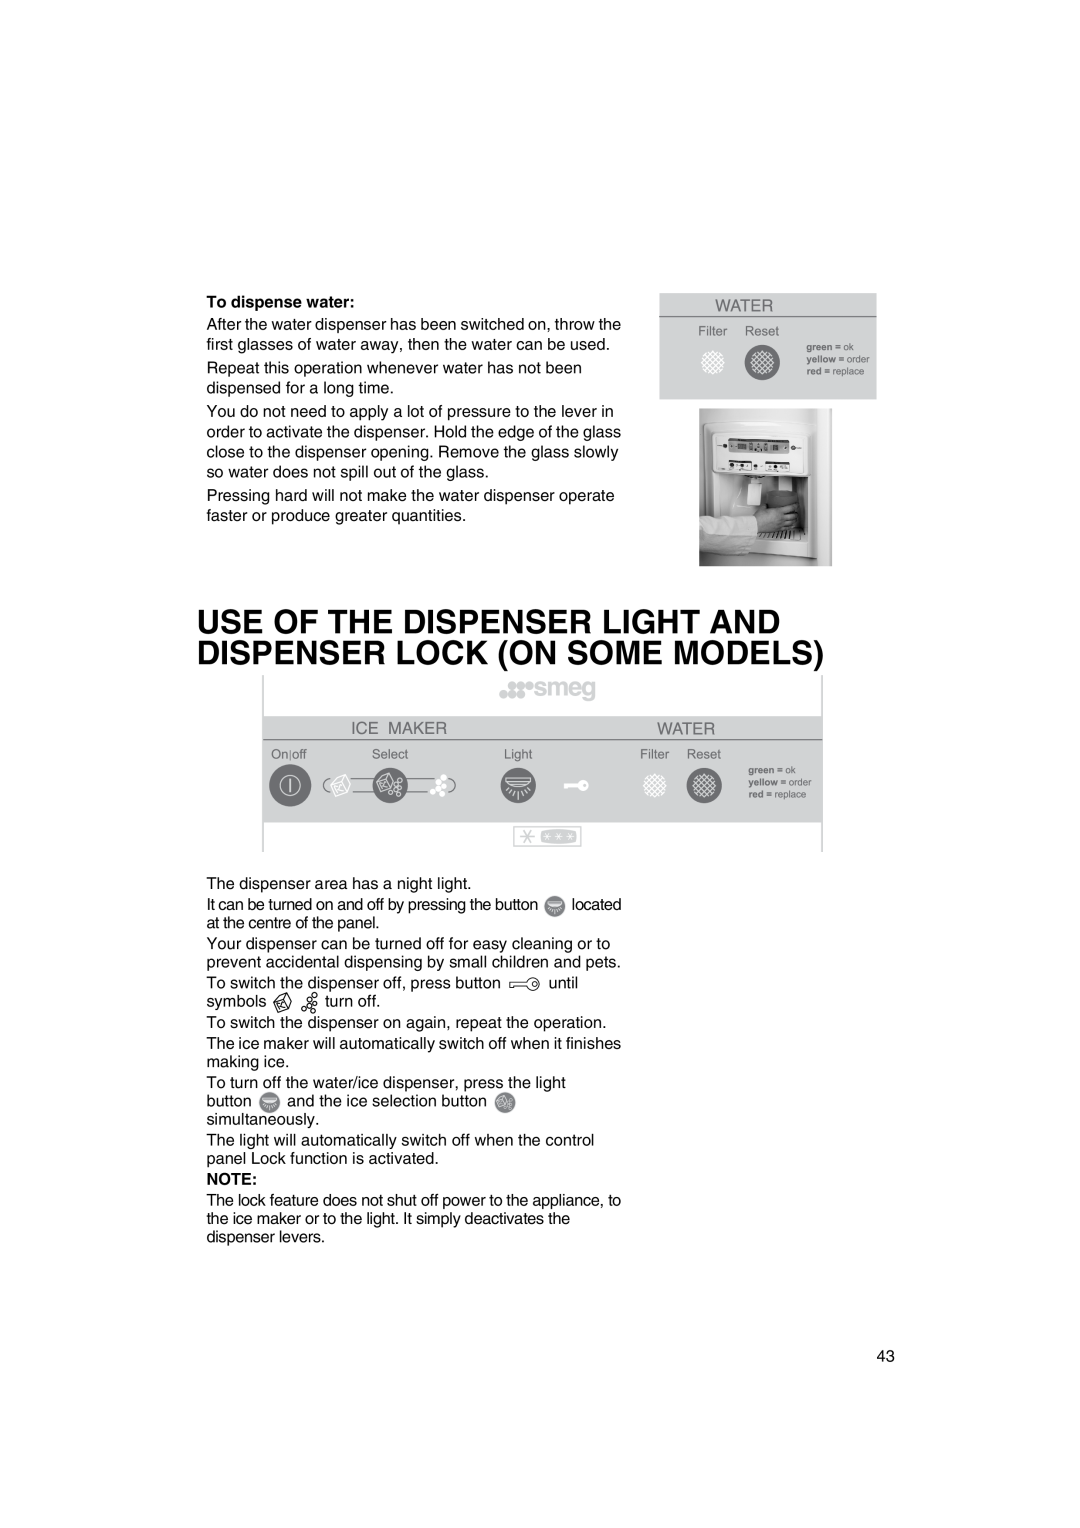 Smeg FA550XBI manual Use Of The Dispenser Light And Dispenser Lock On Some Models, To dispense water 